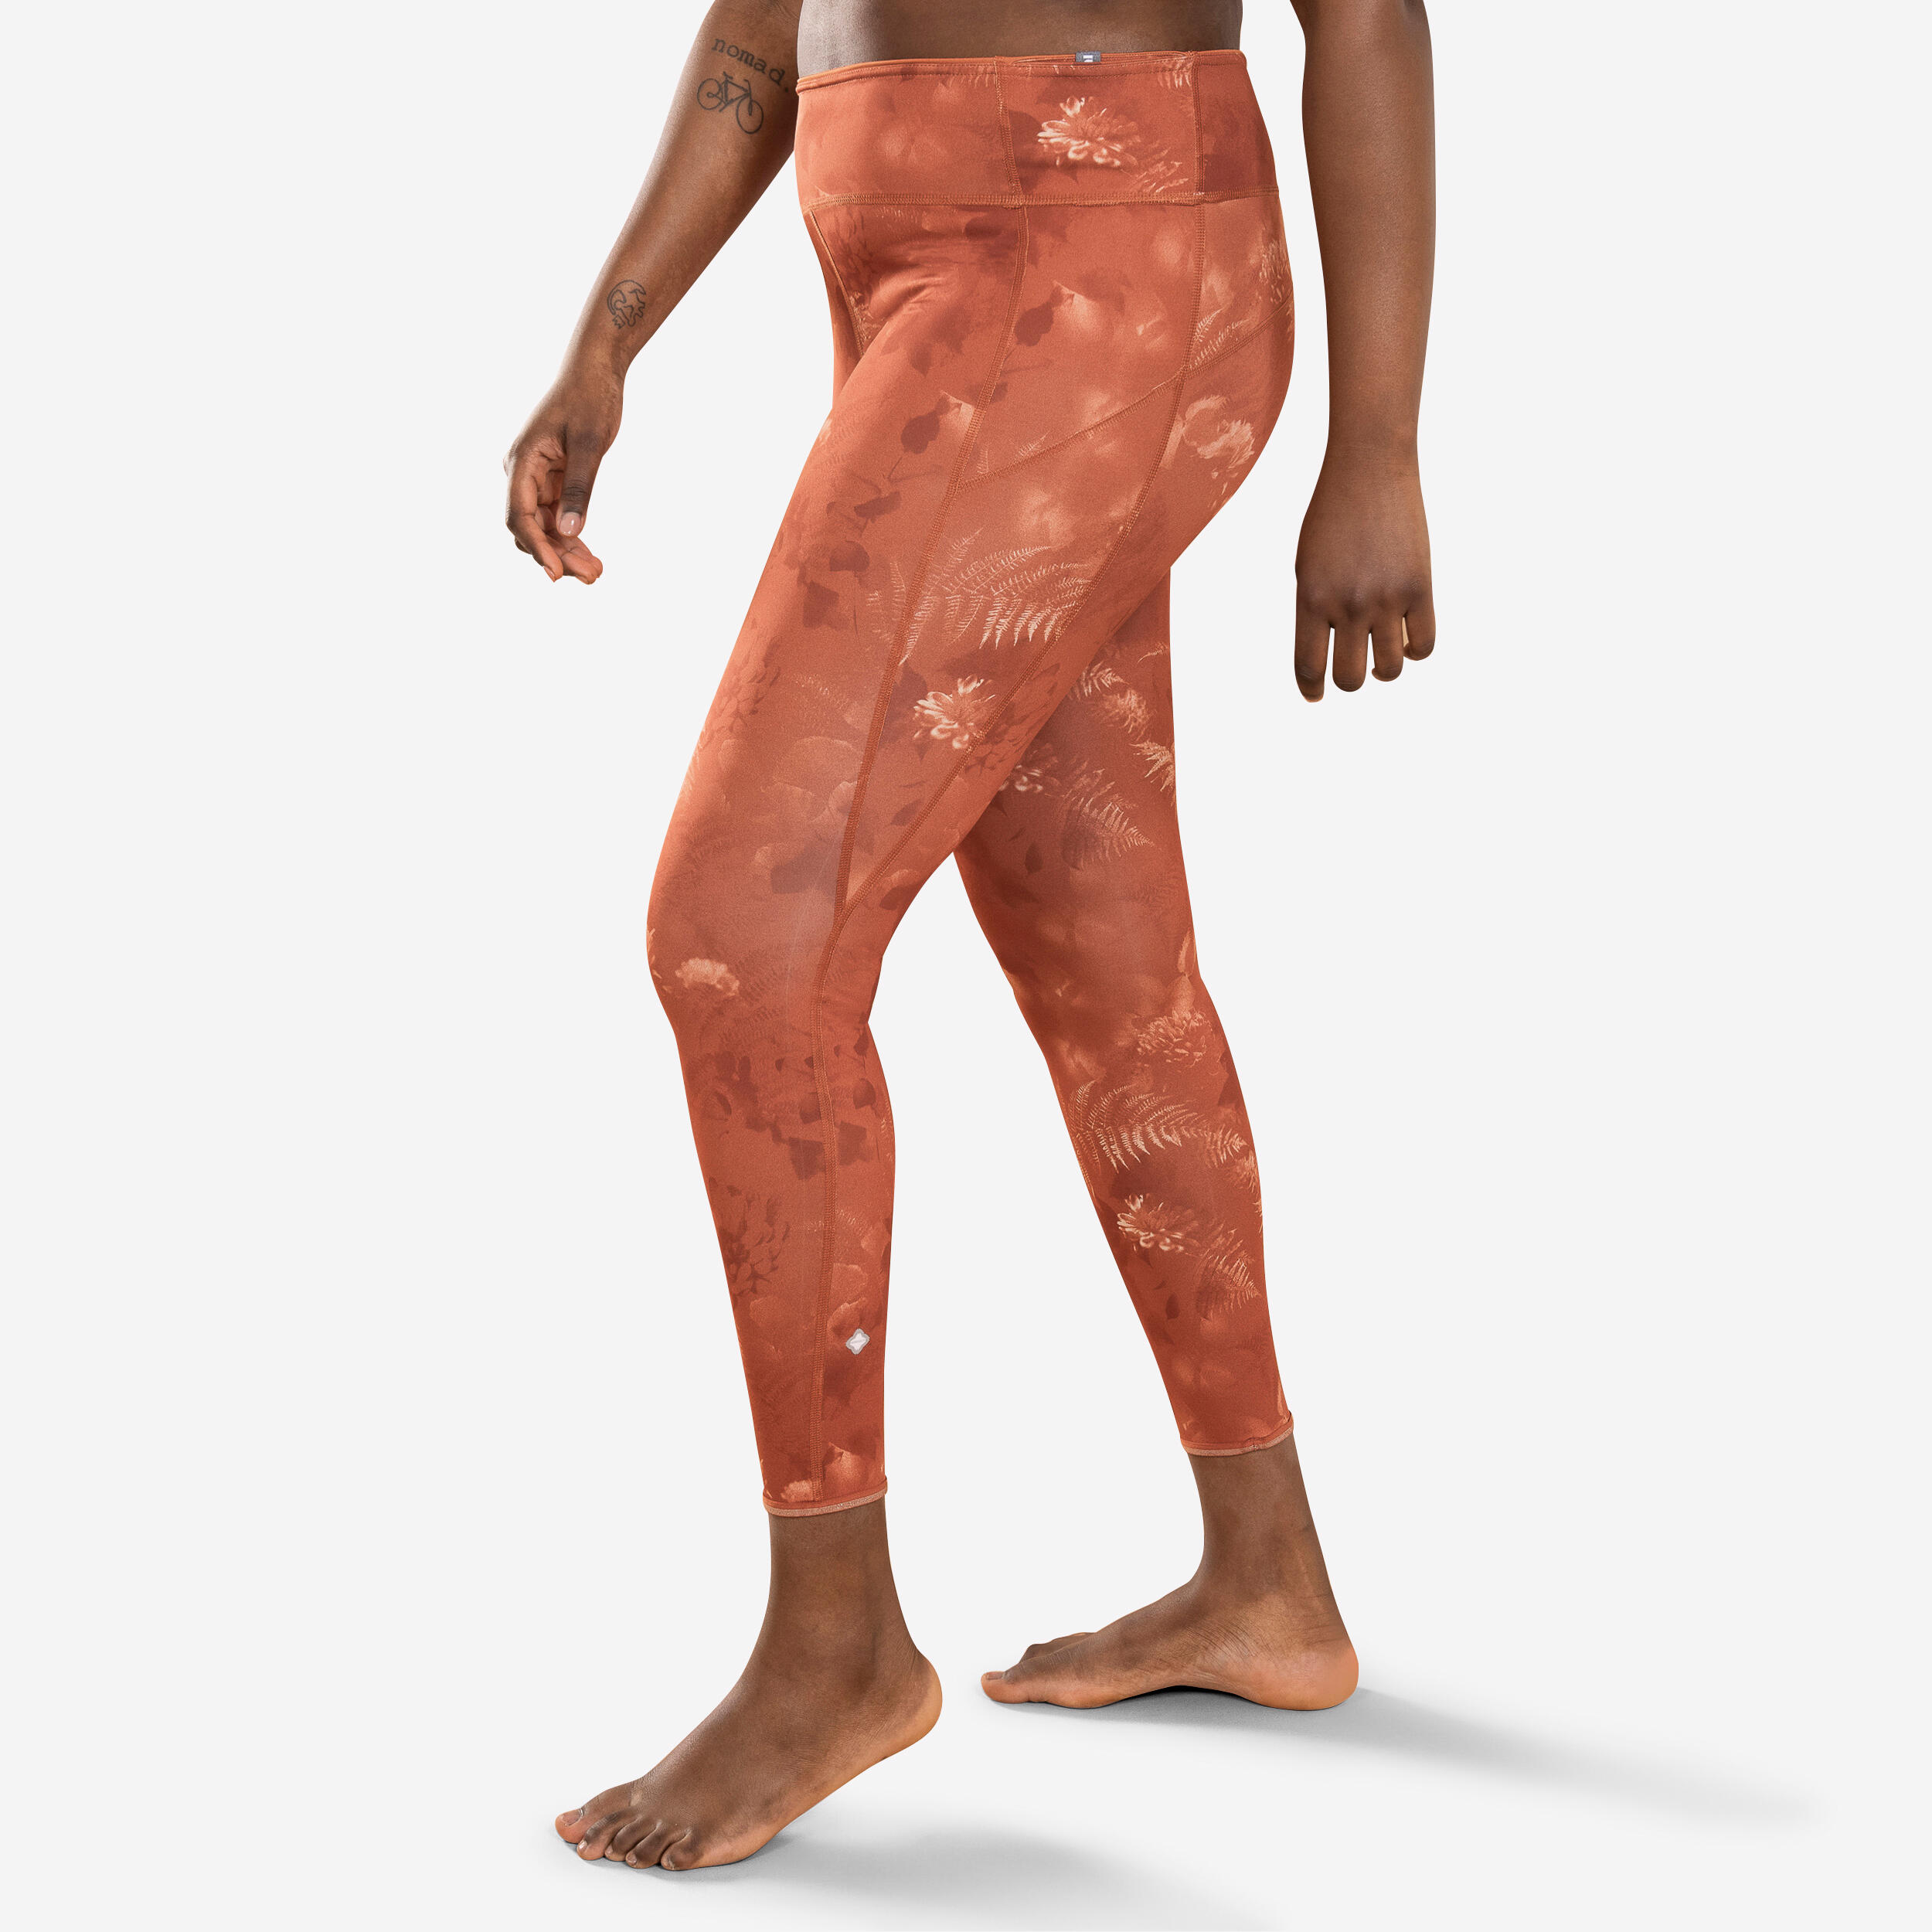 KIMJALY Women's Dynamic Yoga Reversible Leggings - Solid/Print Brown and Orange